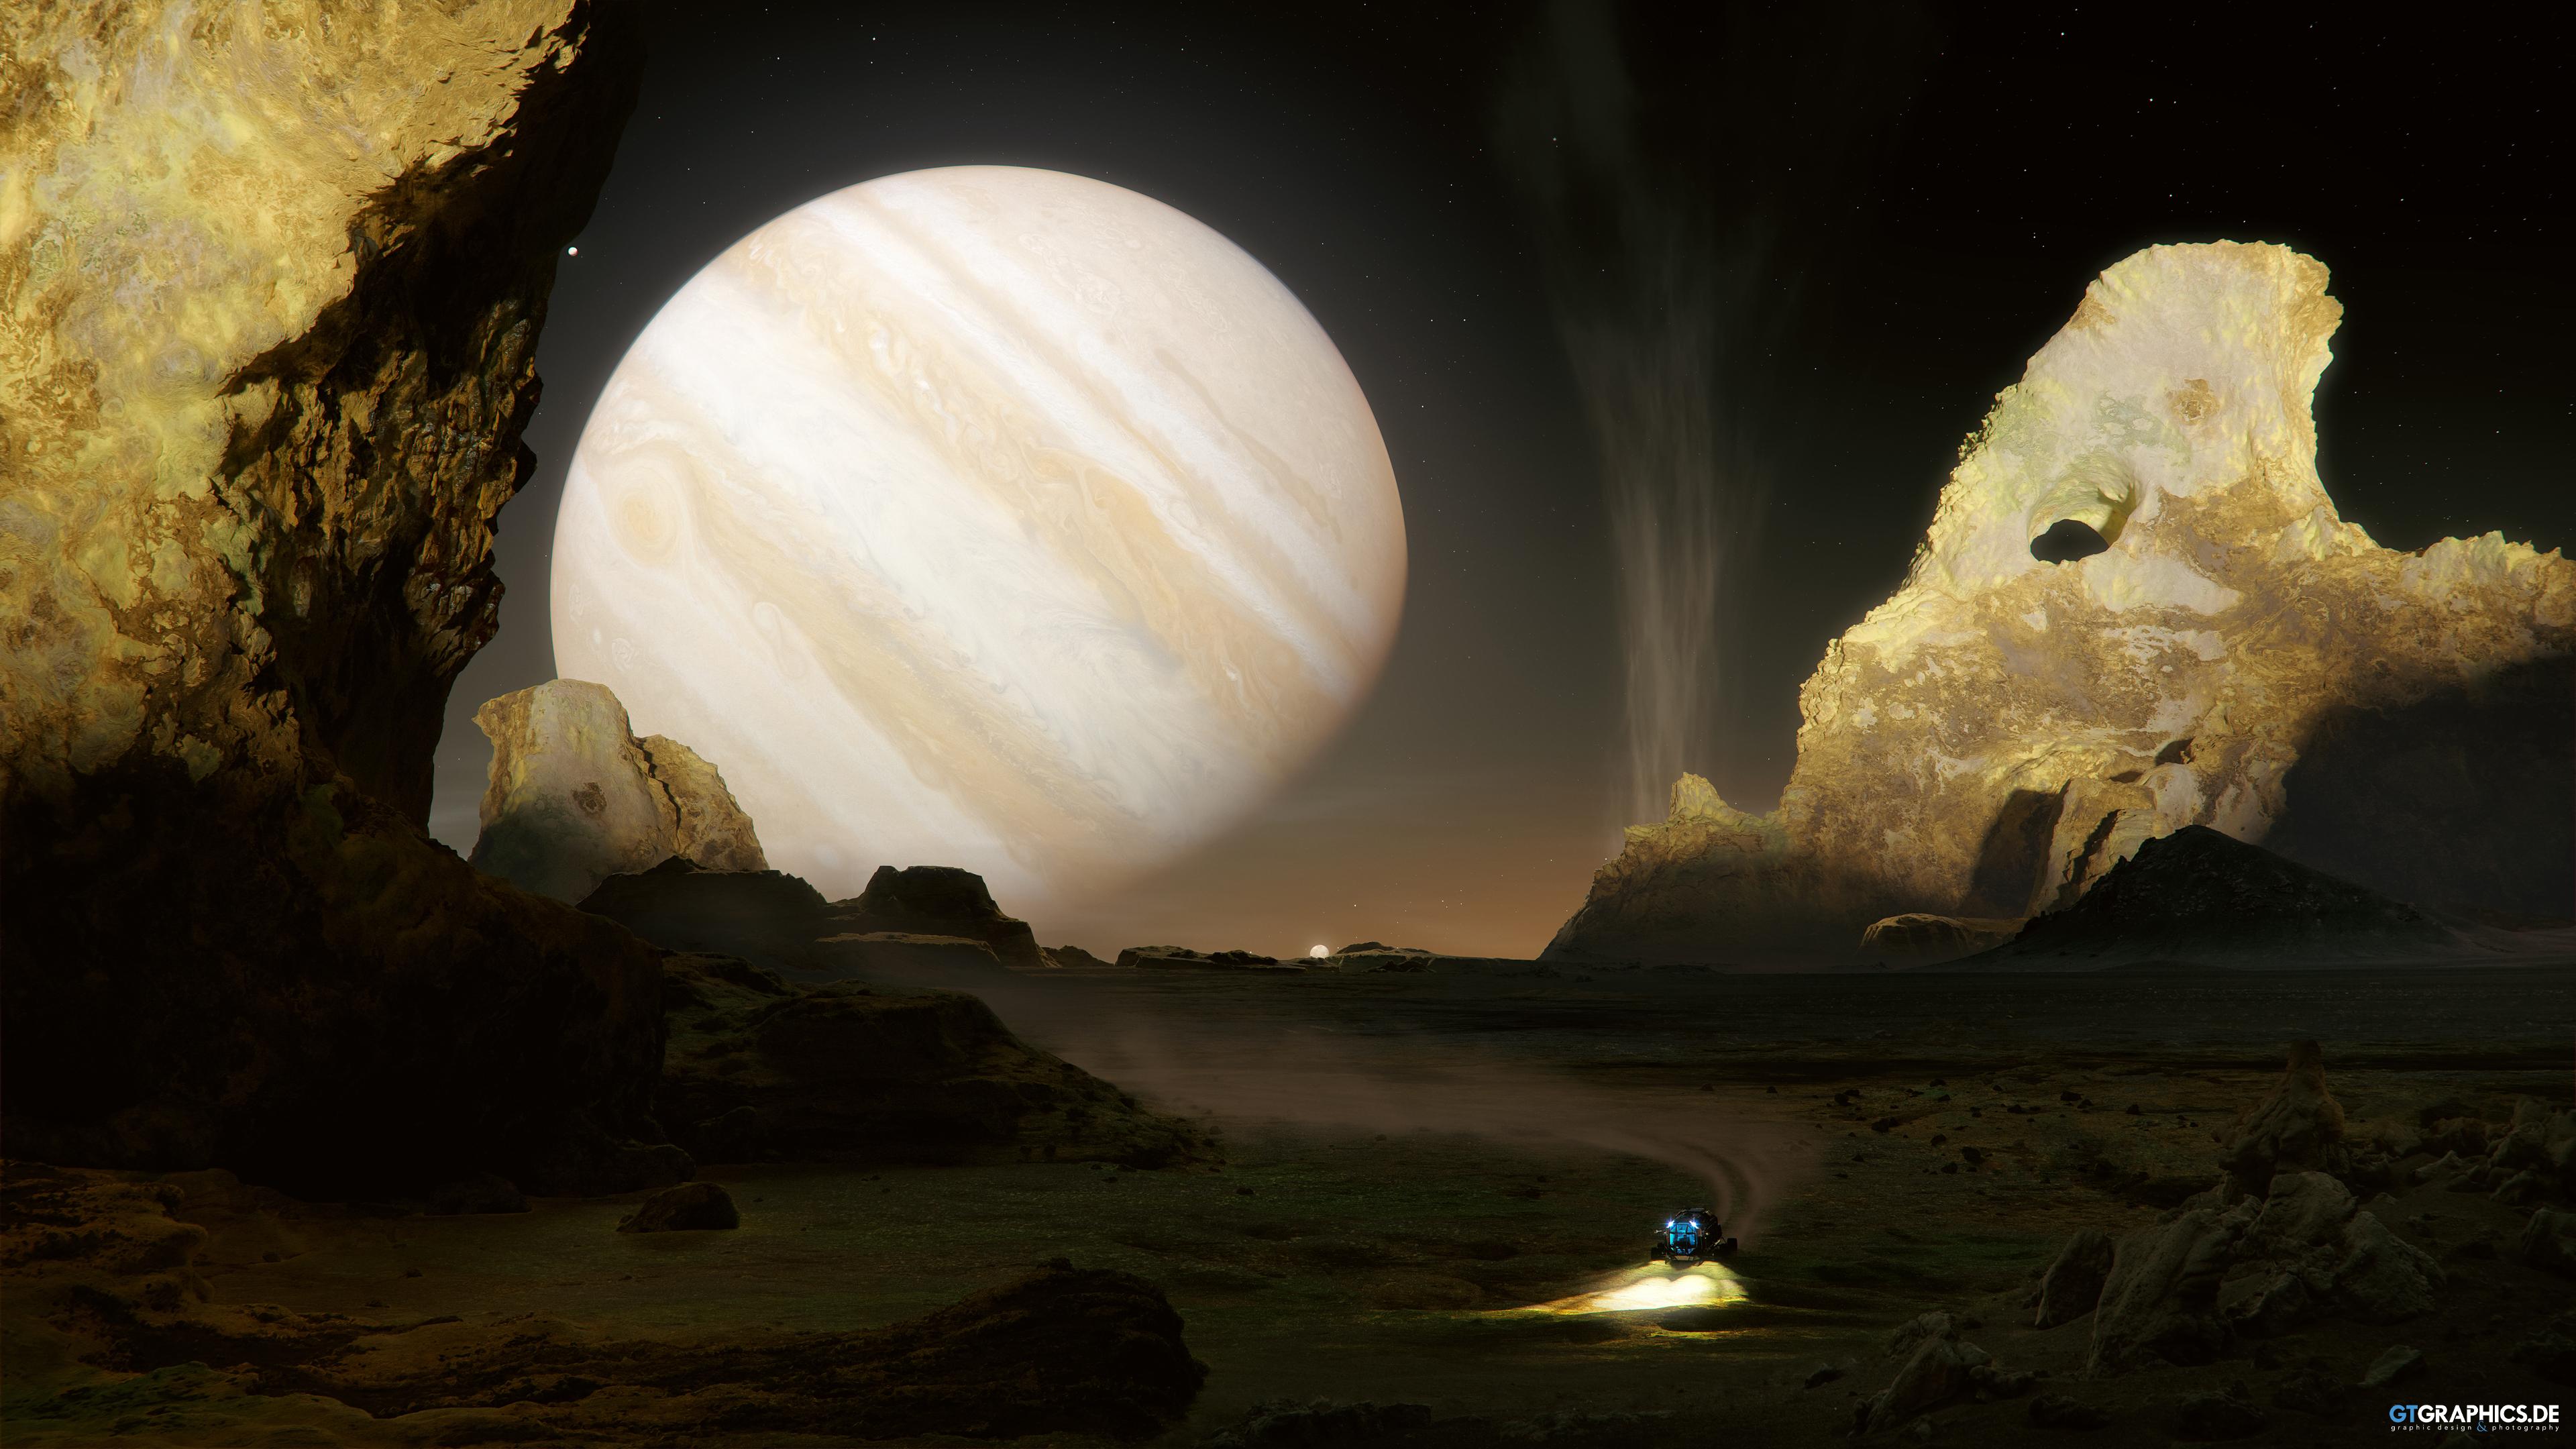 General 3840x2160 GTGraphics digital art artwork illustration CGI space art landscape planet rock formation sunlight vehicle Jupiter stars watermarked 4K